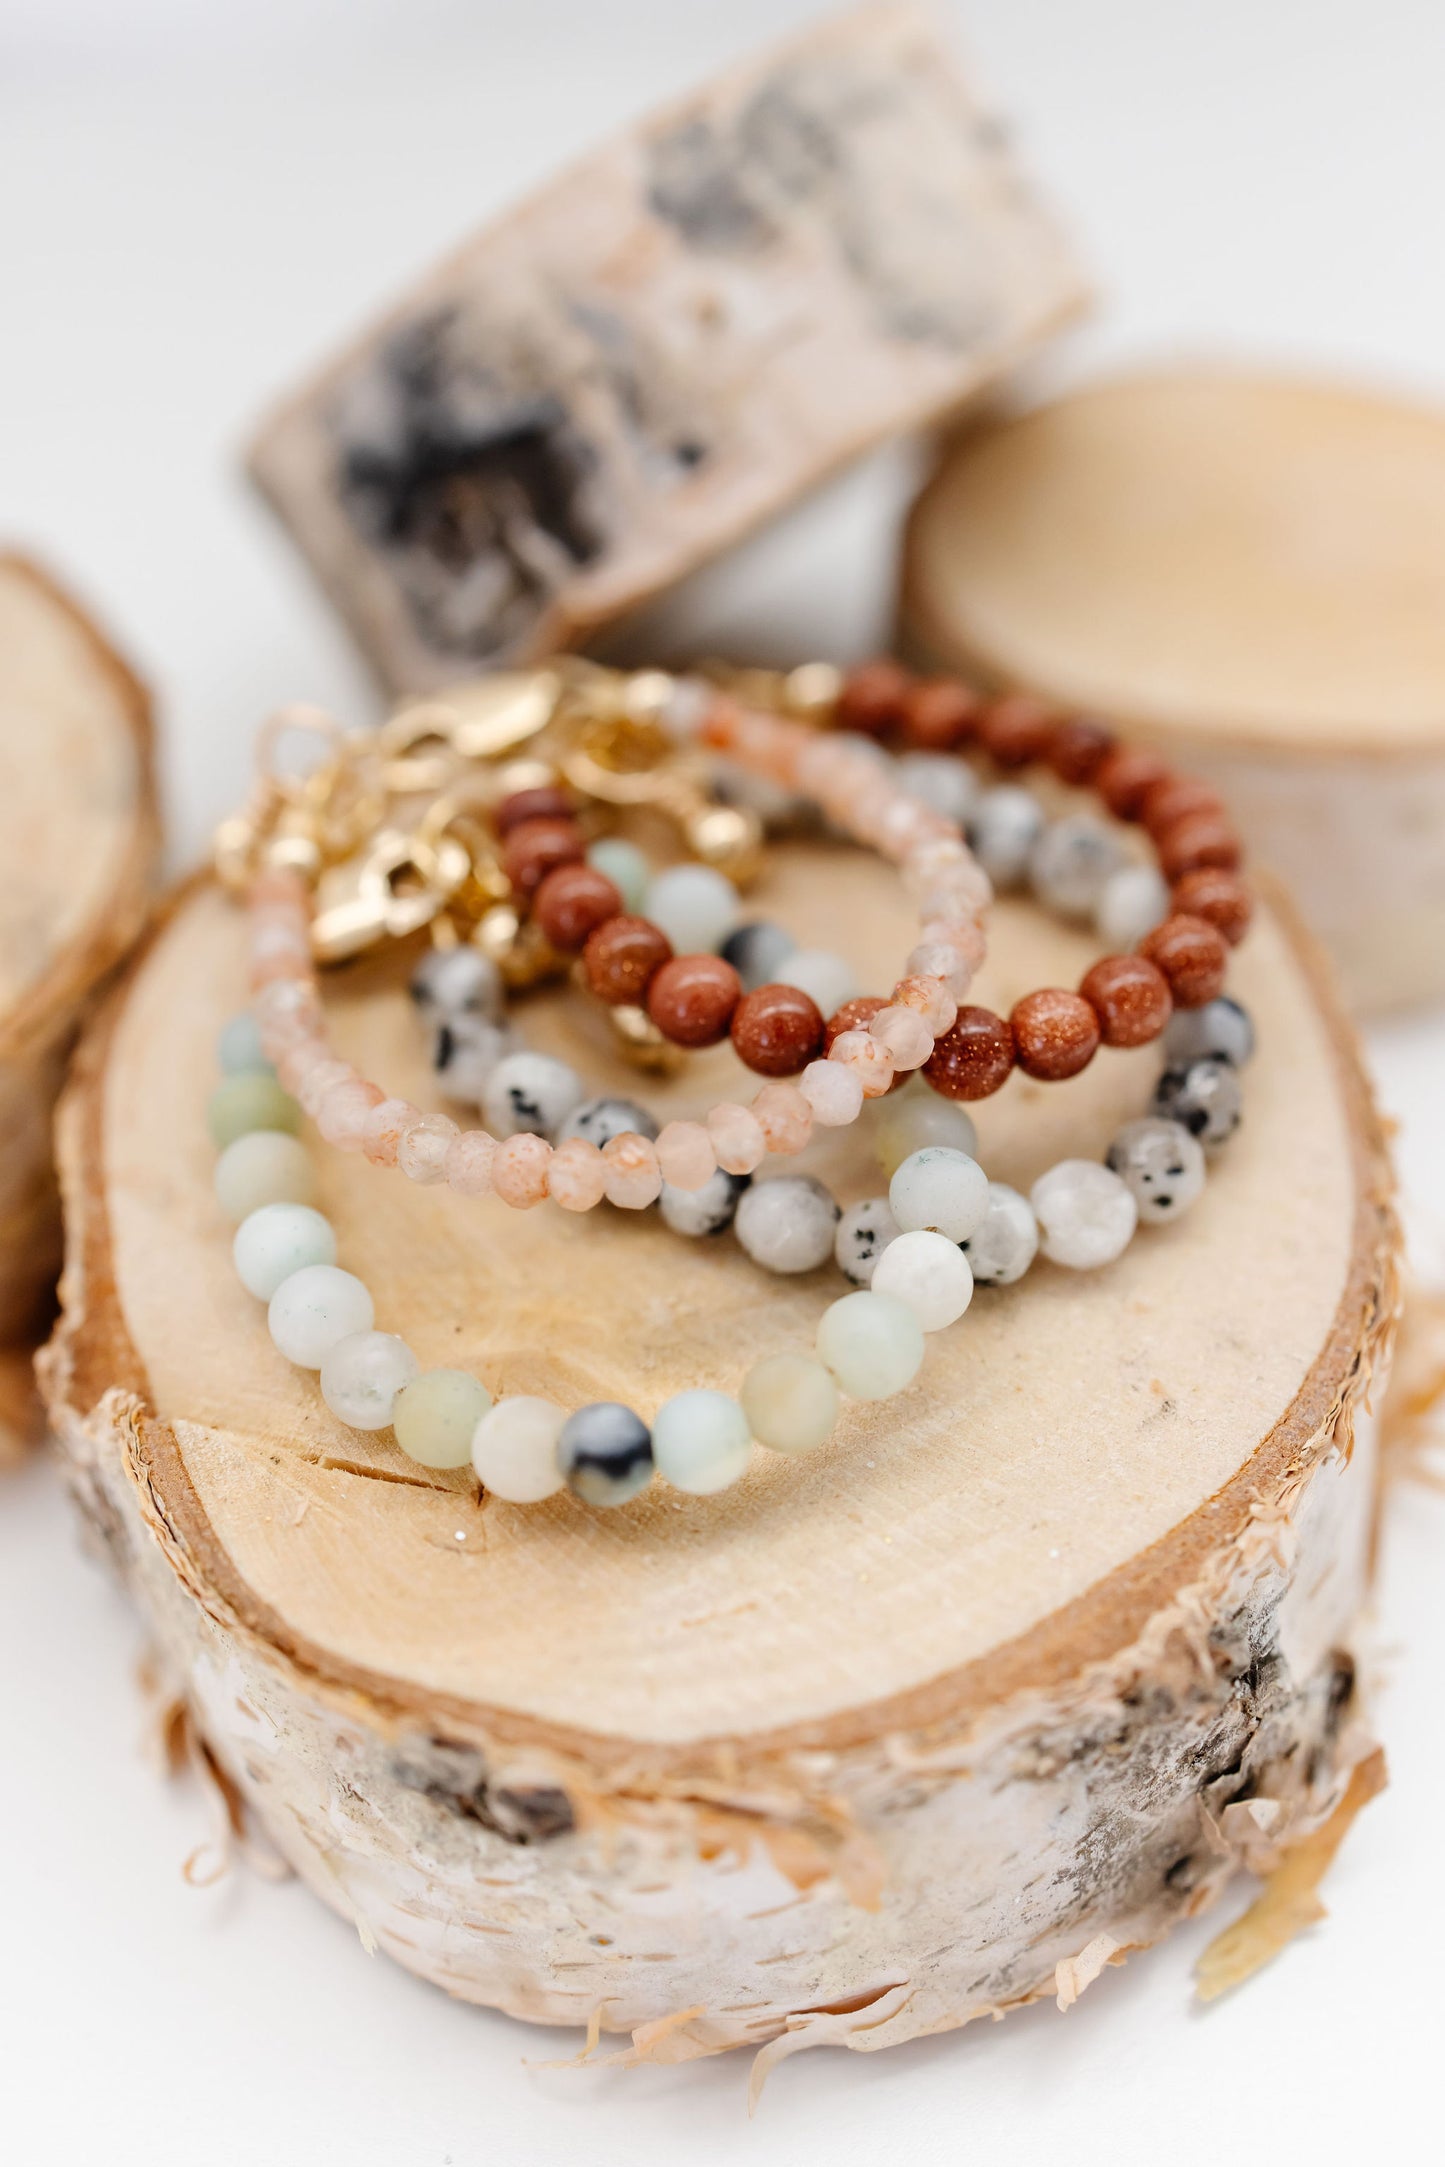 Quarry Adult Bracelet (4MM beads)